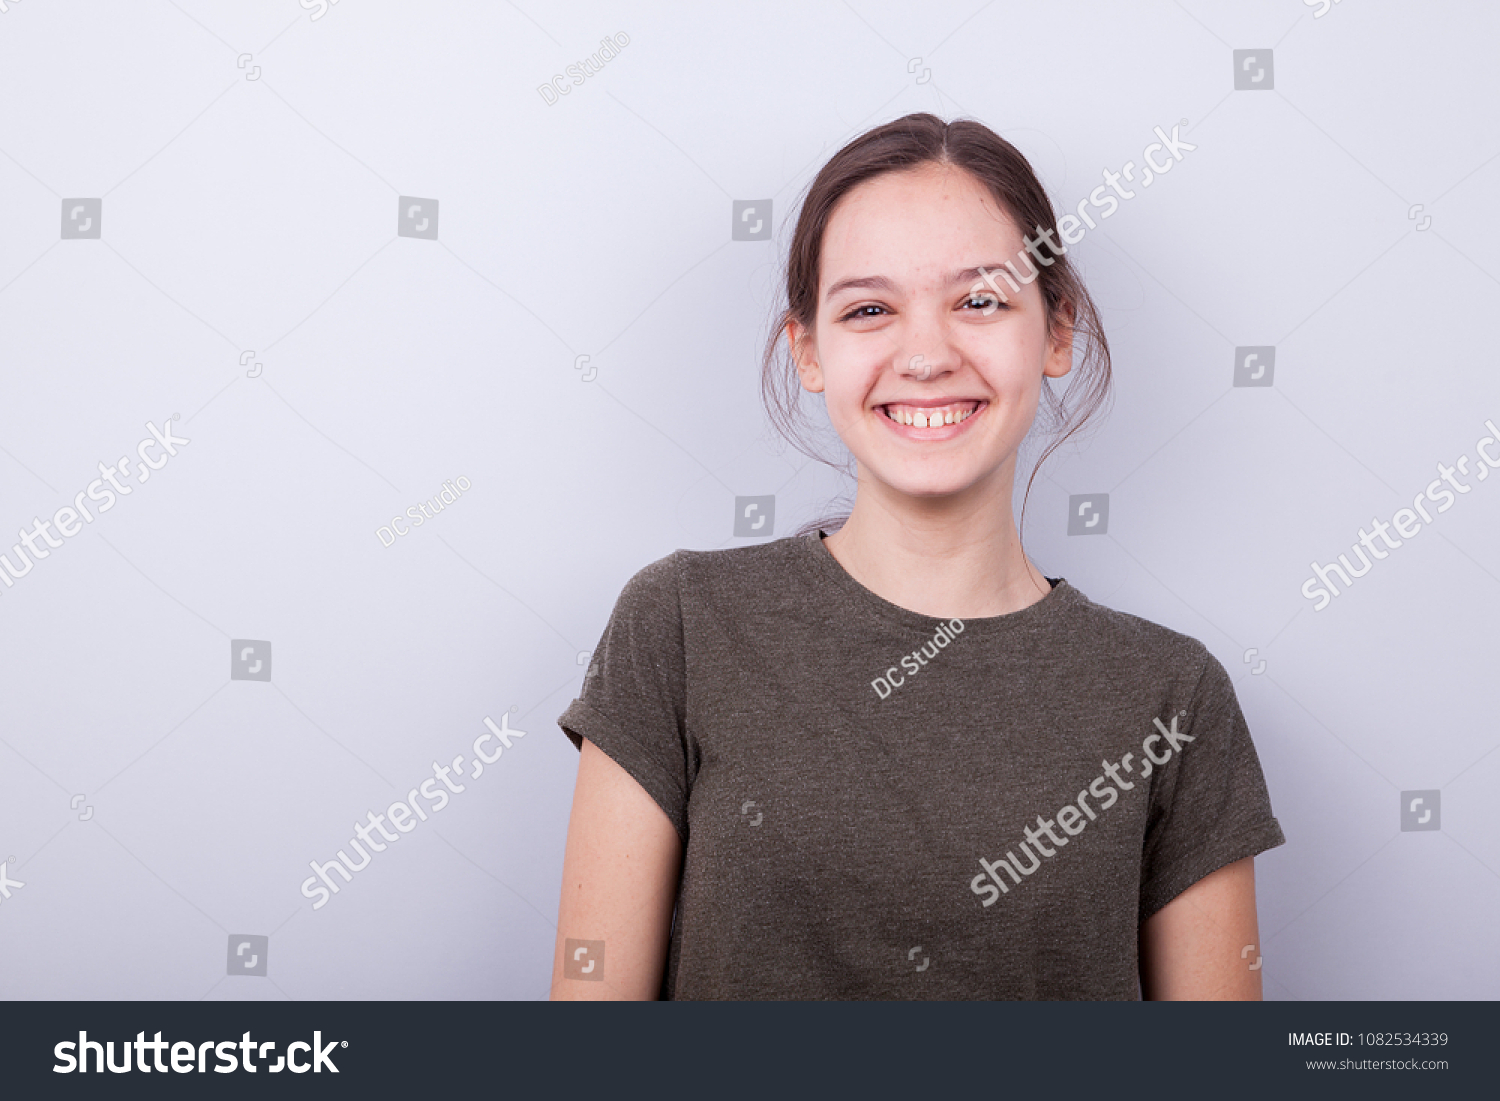 Portrait of smiling happy girl on gray background in studio photo #1082534339